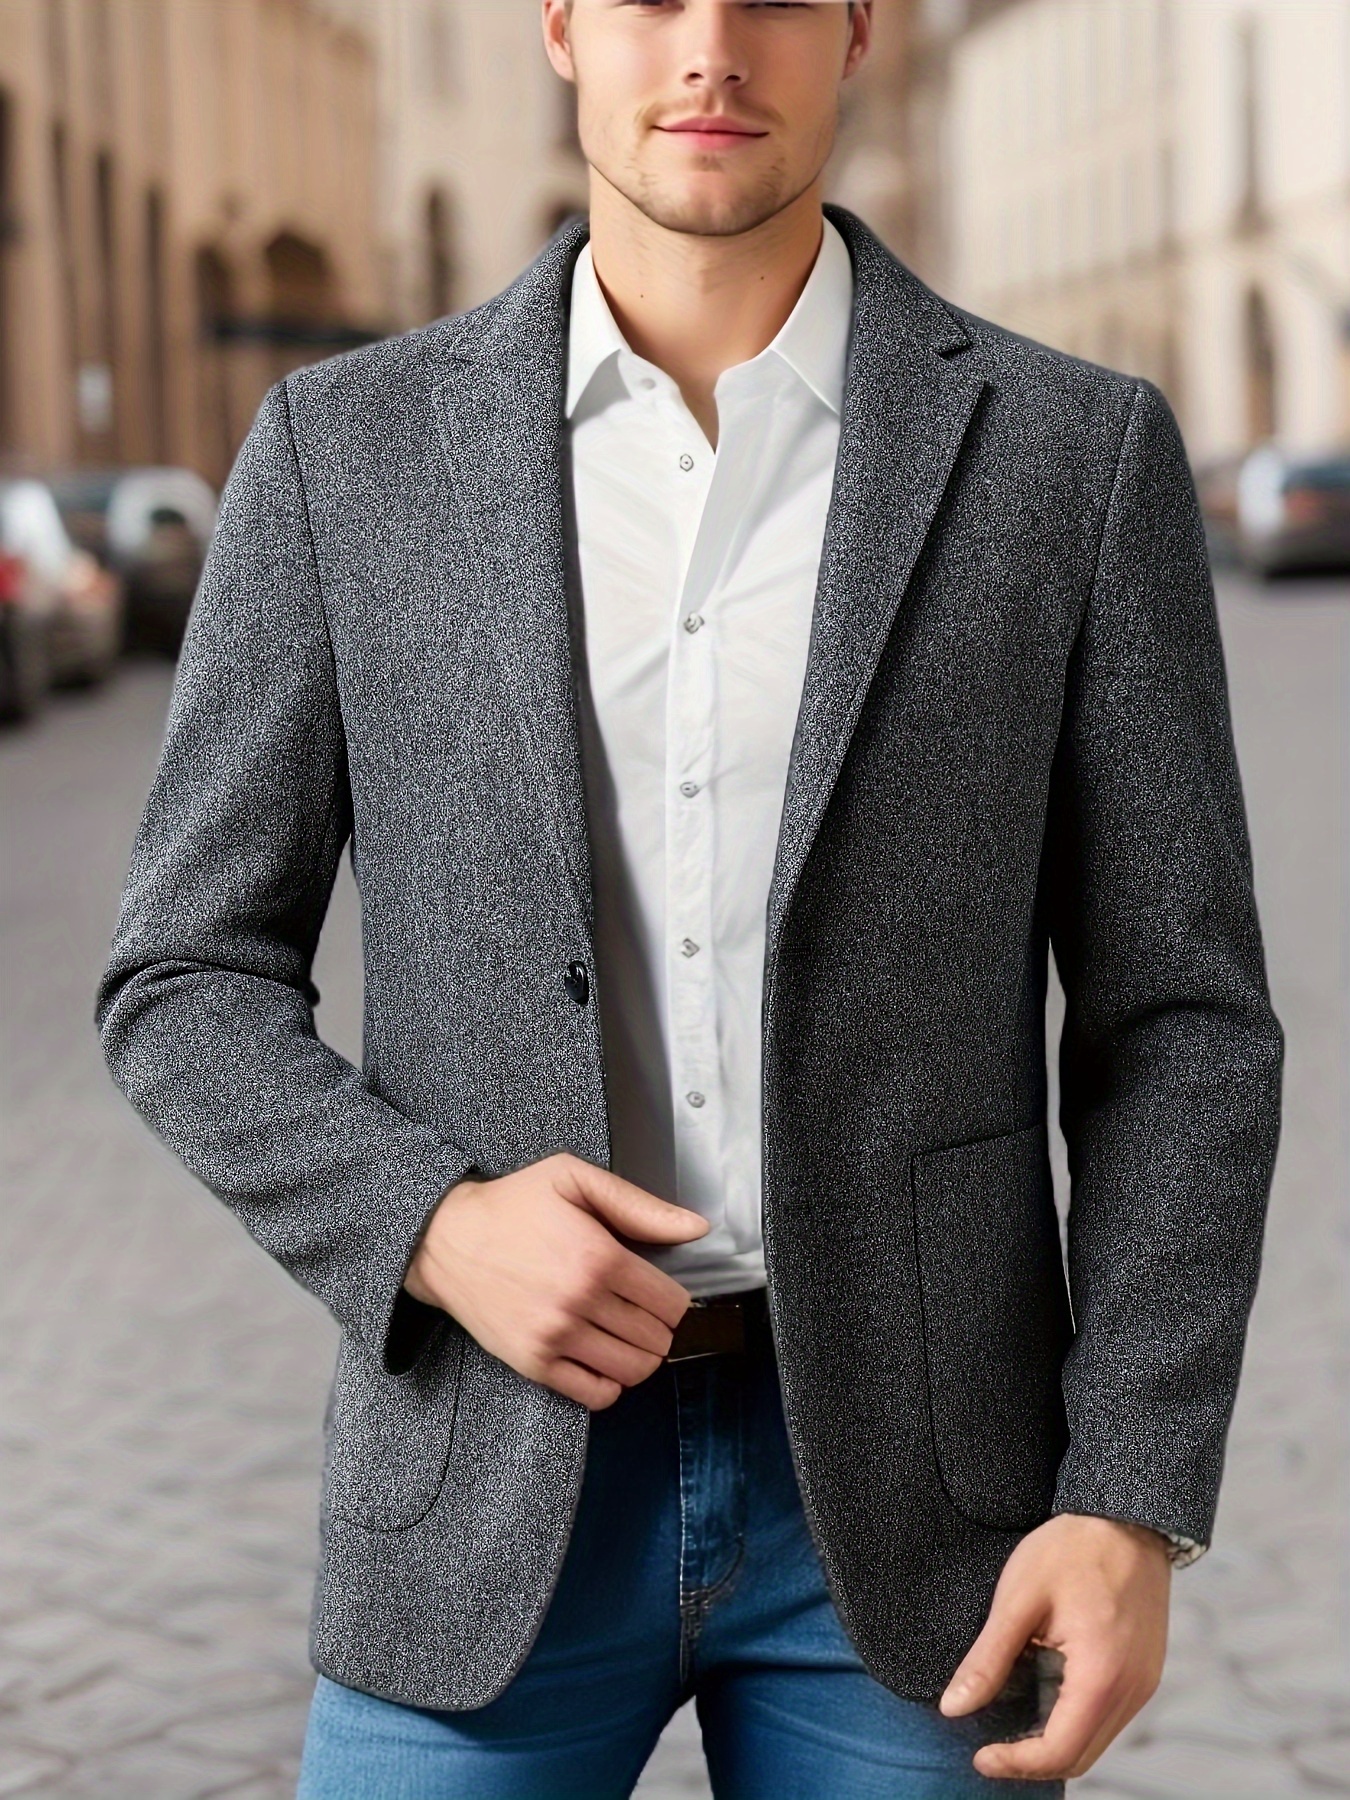 Suits-&-separates Men's Business Dress, Featured